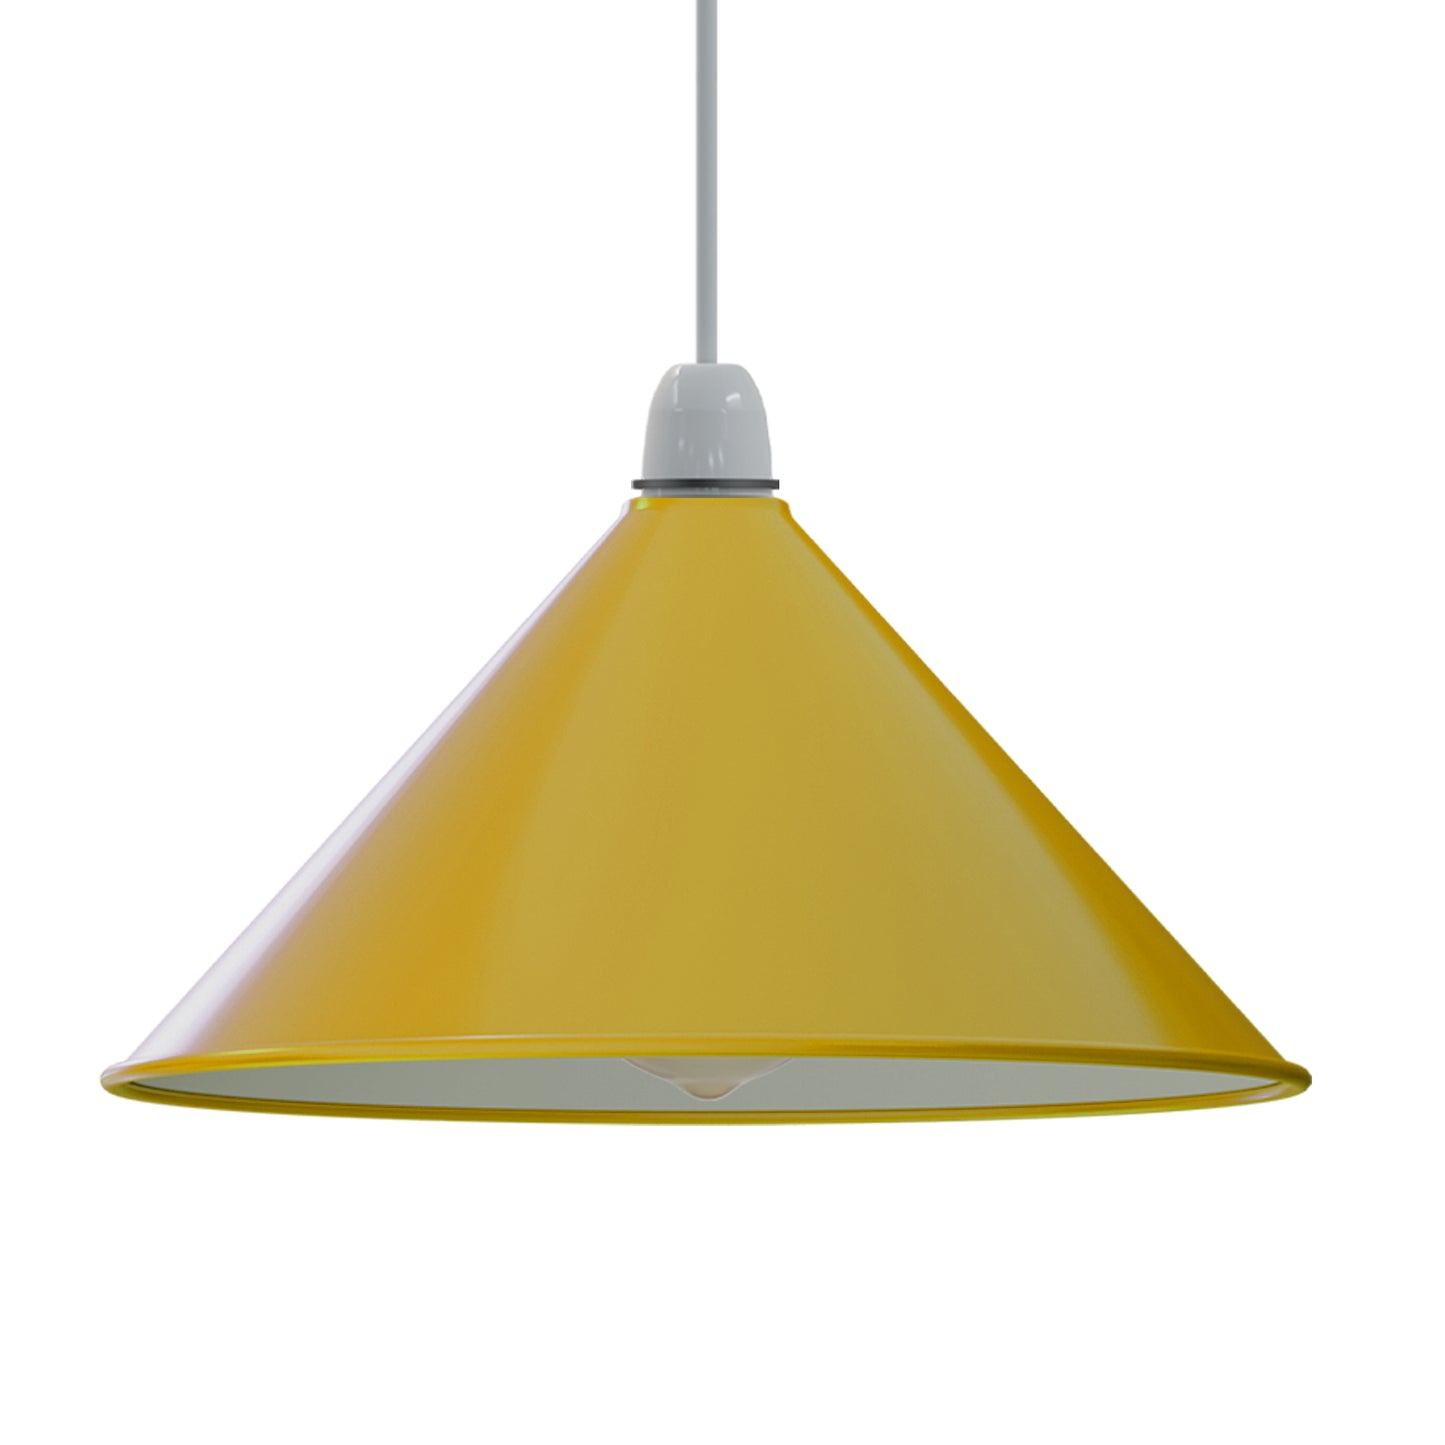 Yellow Metal Cone Style Lamp Shade